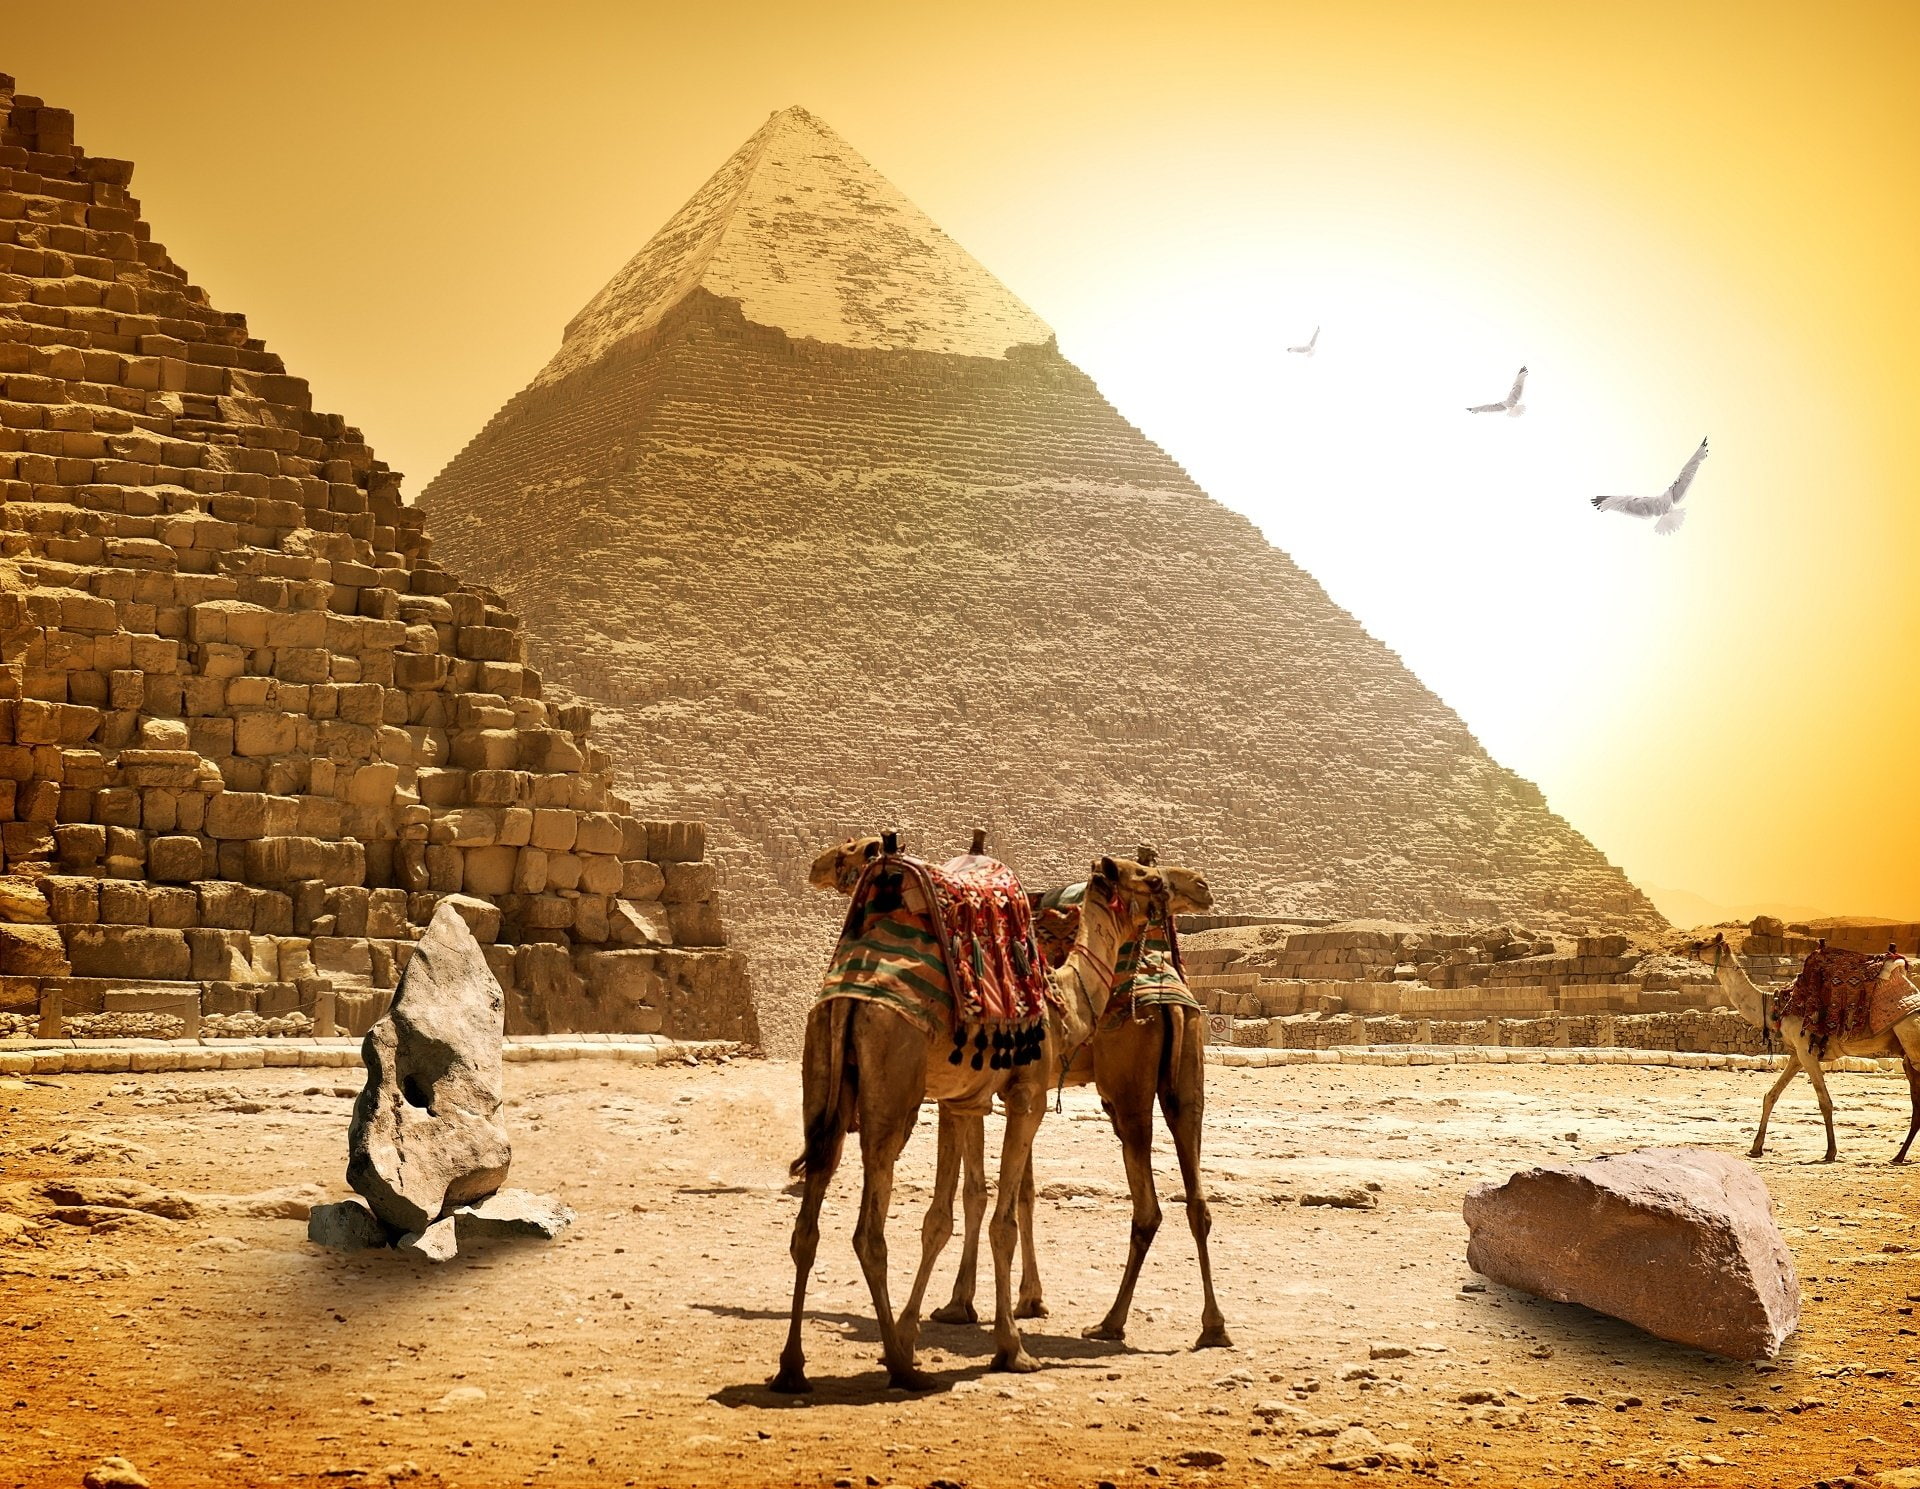 Man Made, Pyramid, Camel, Egyptian